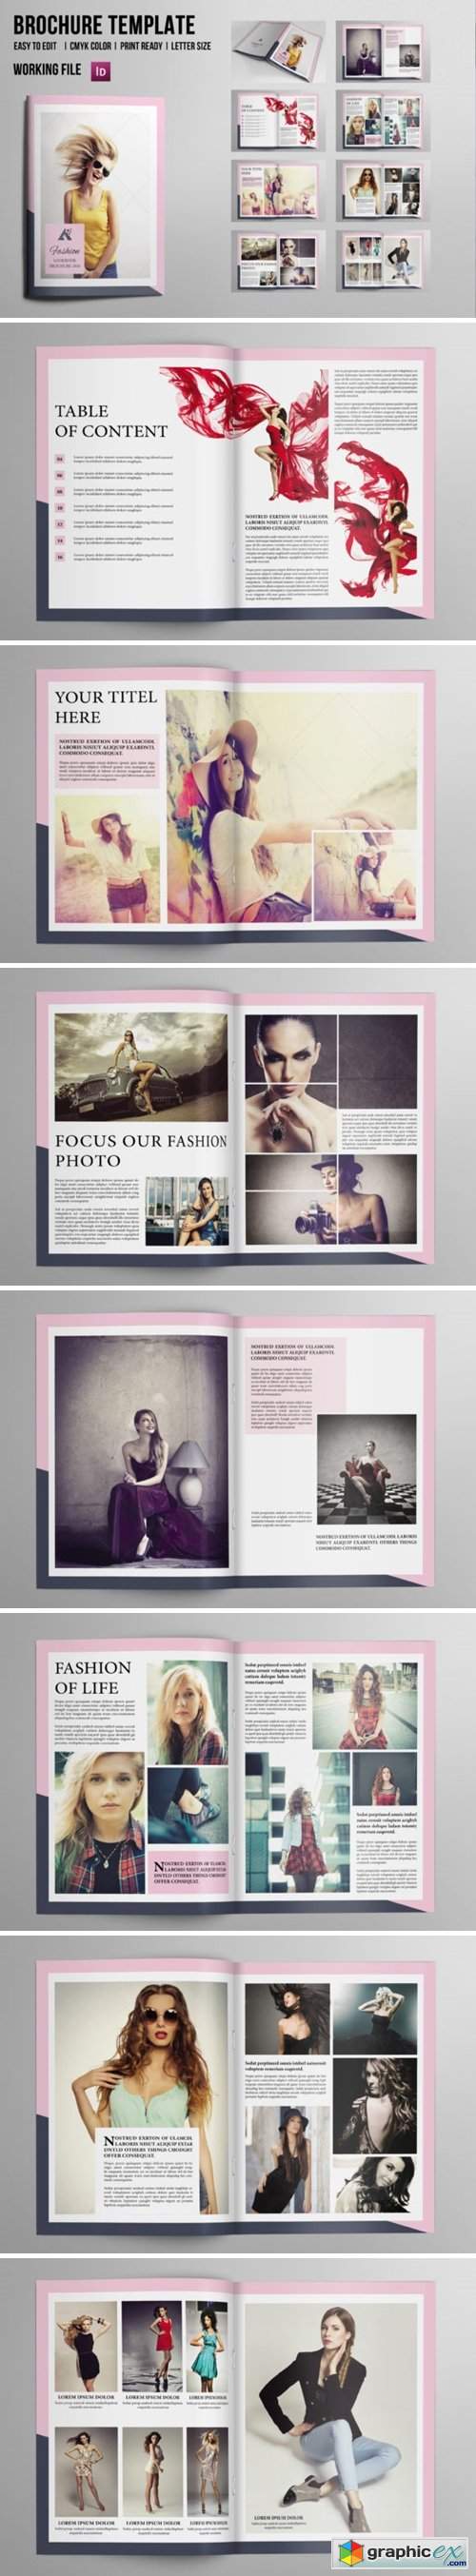  Fashion Lookbook Magazine Template 